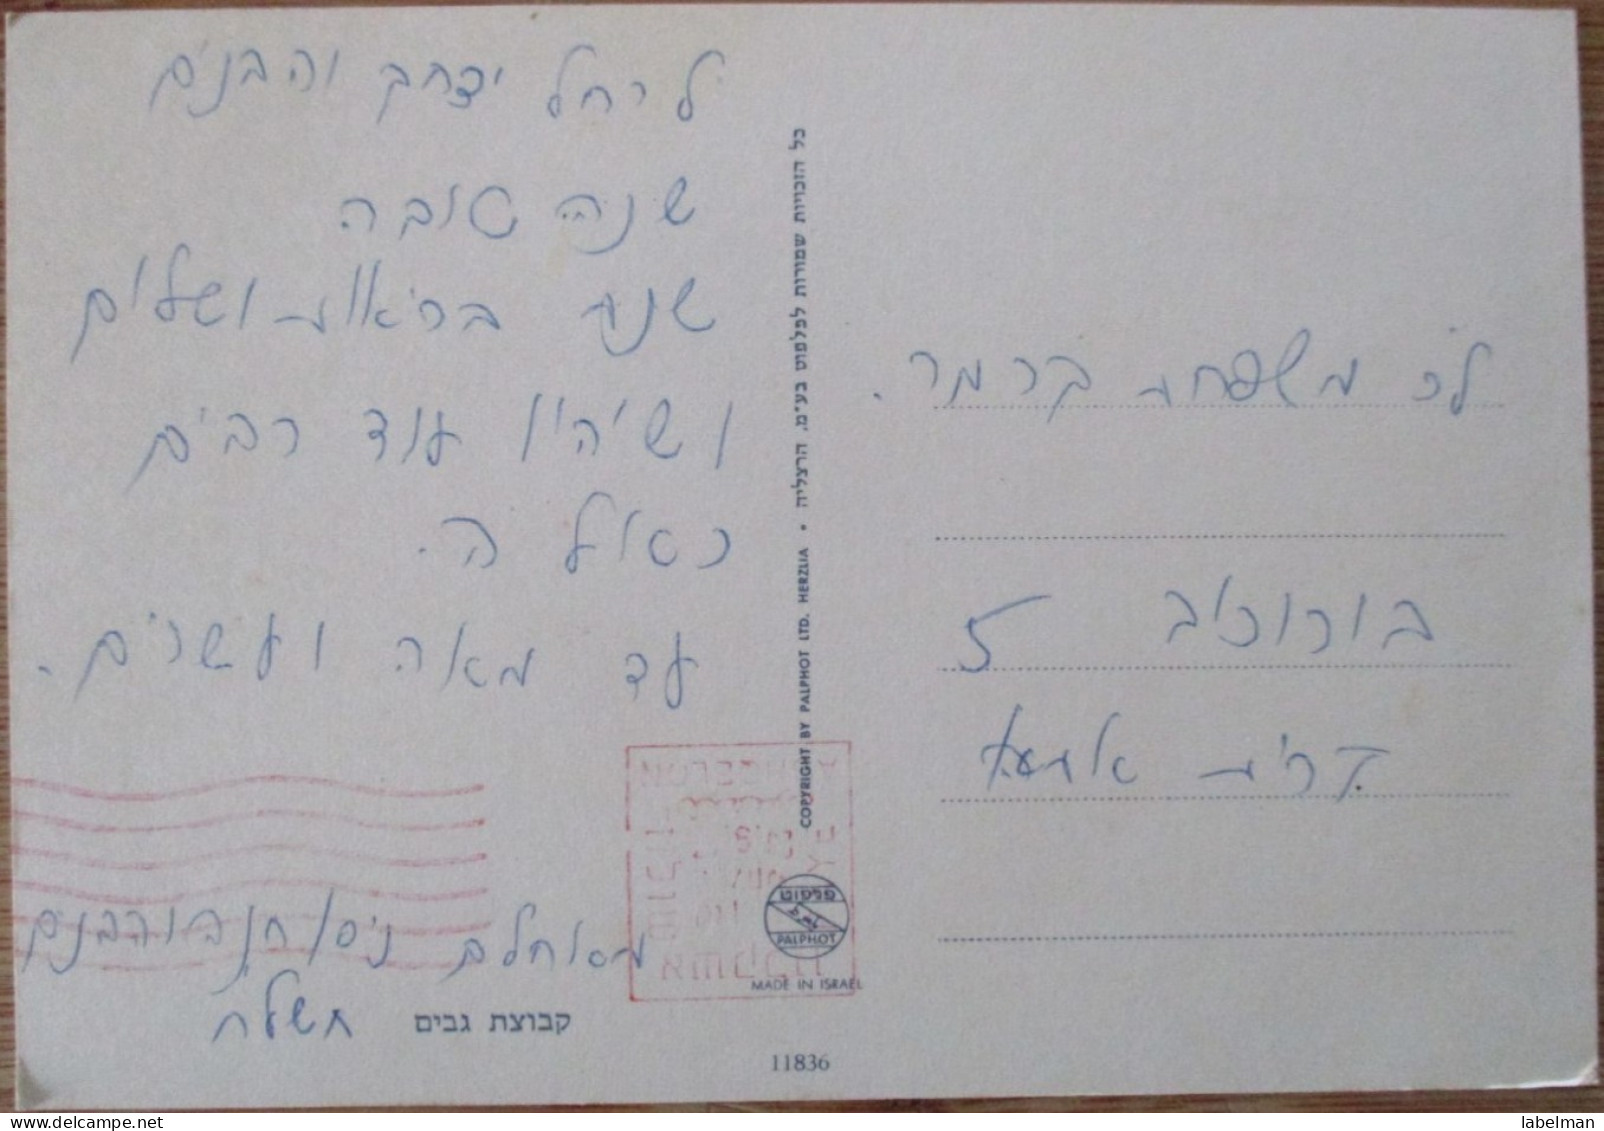 ISRAEL SDEROT NEGEV DESERT KIBBUTZ GEVIM POSTCARD KARTE CARD ANSICHTSKARTE CARTOLINA CARTE POSTALE PC POSTKARTE - Israel